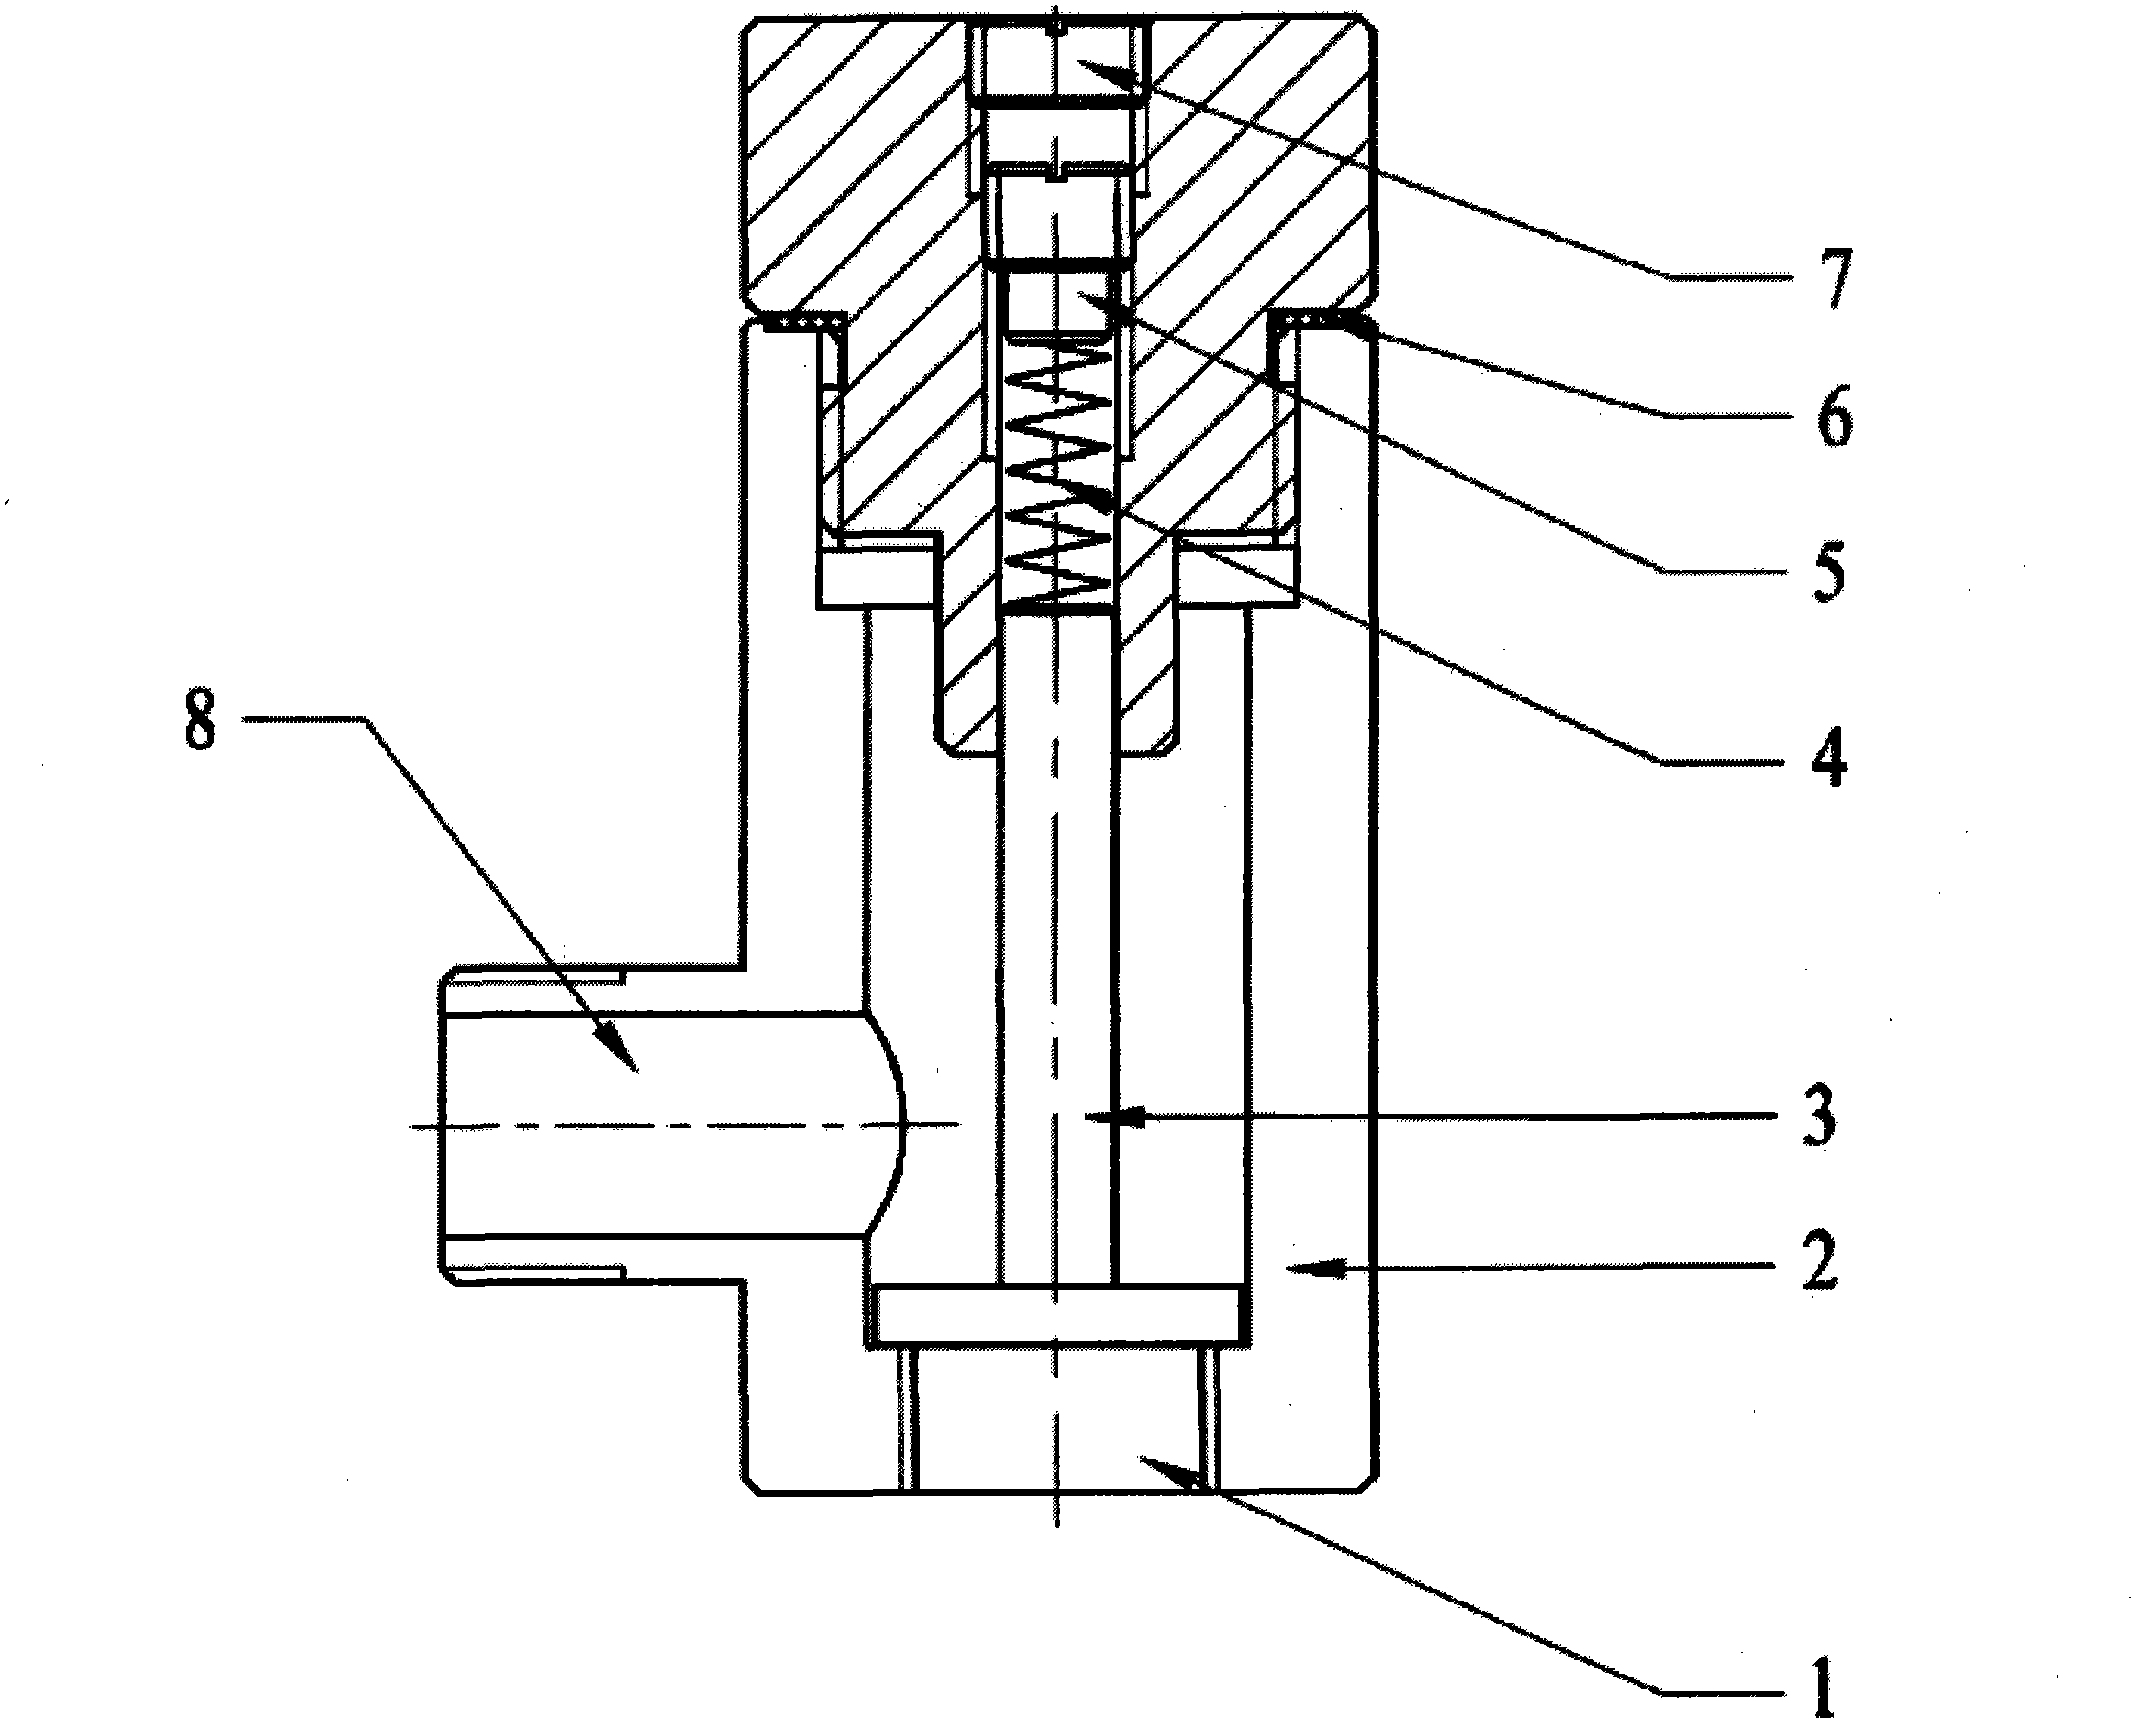 One-way automatic decompression valve structure for escape capsule